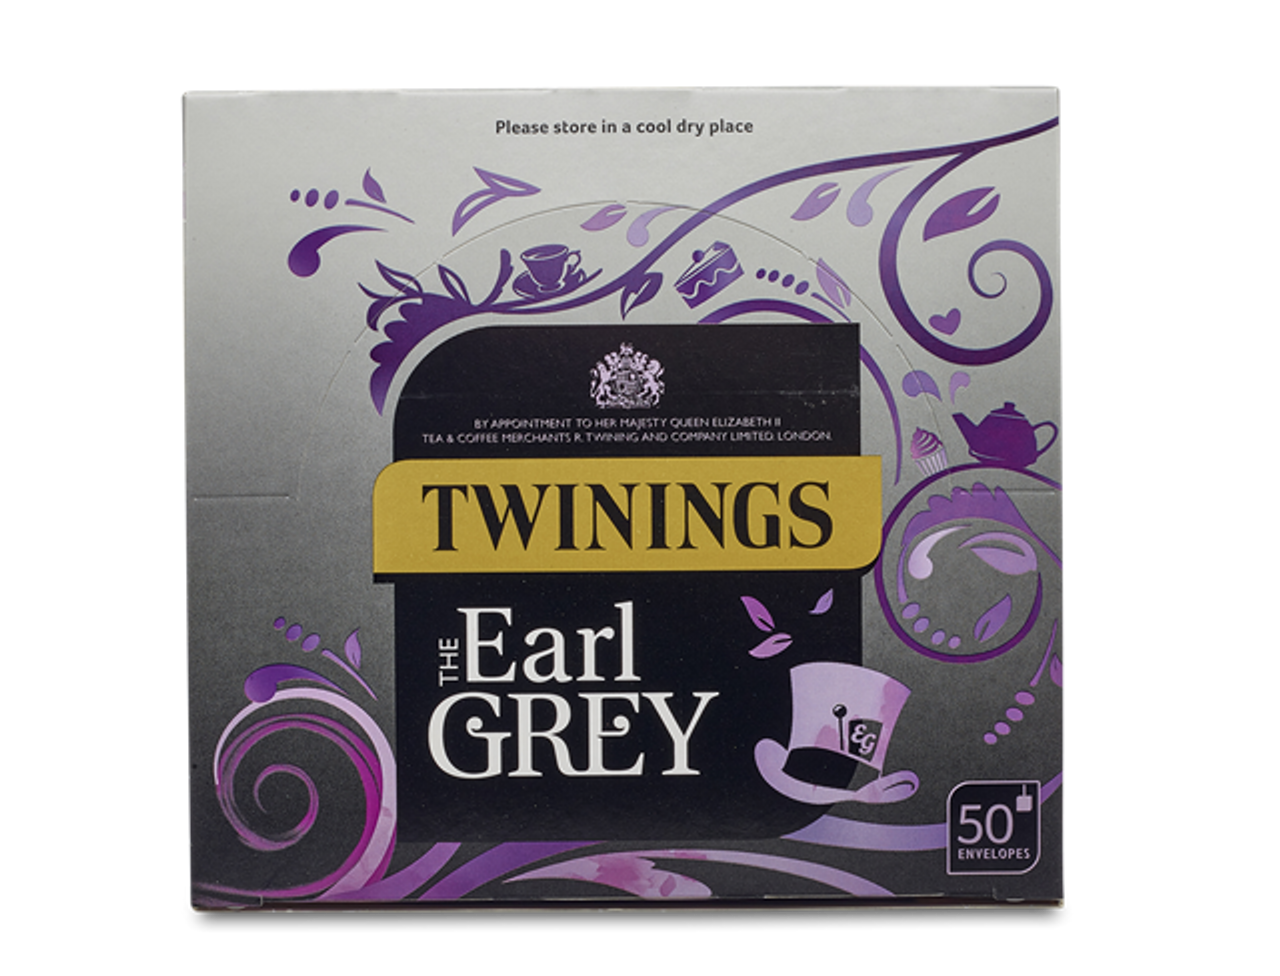 TWININGS EARL GREY TEA ENVELOPES x 50